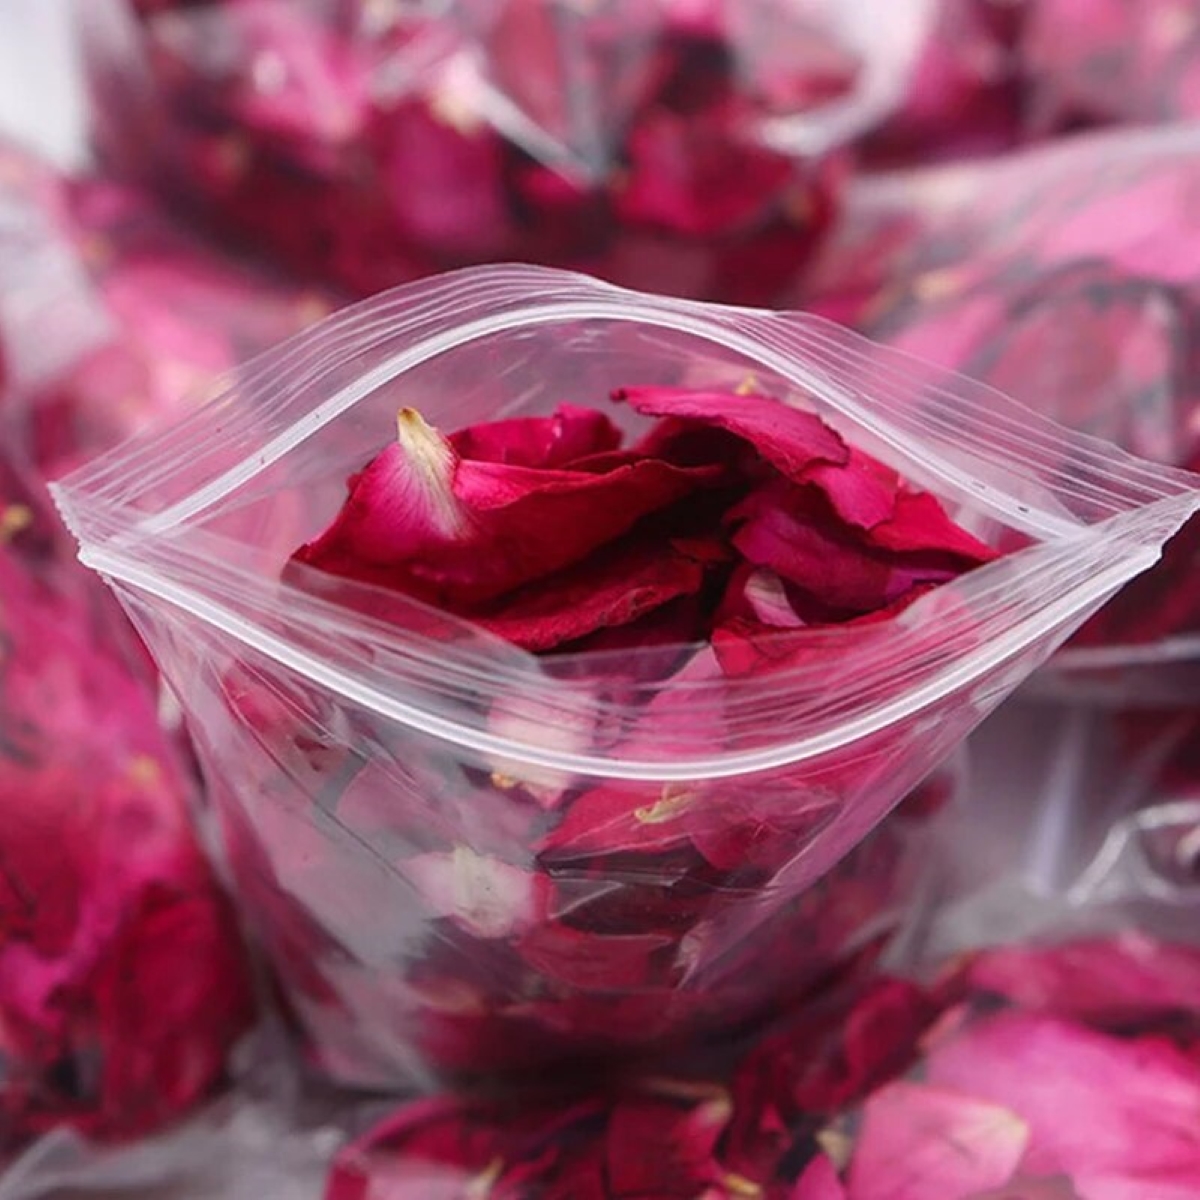 Dried roses in plastic bag.